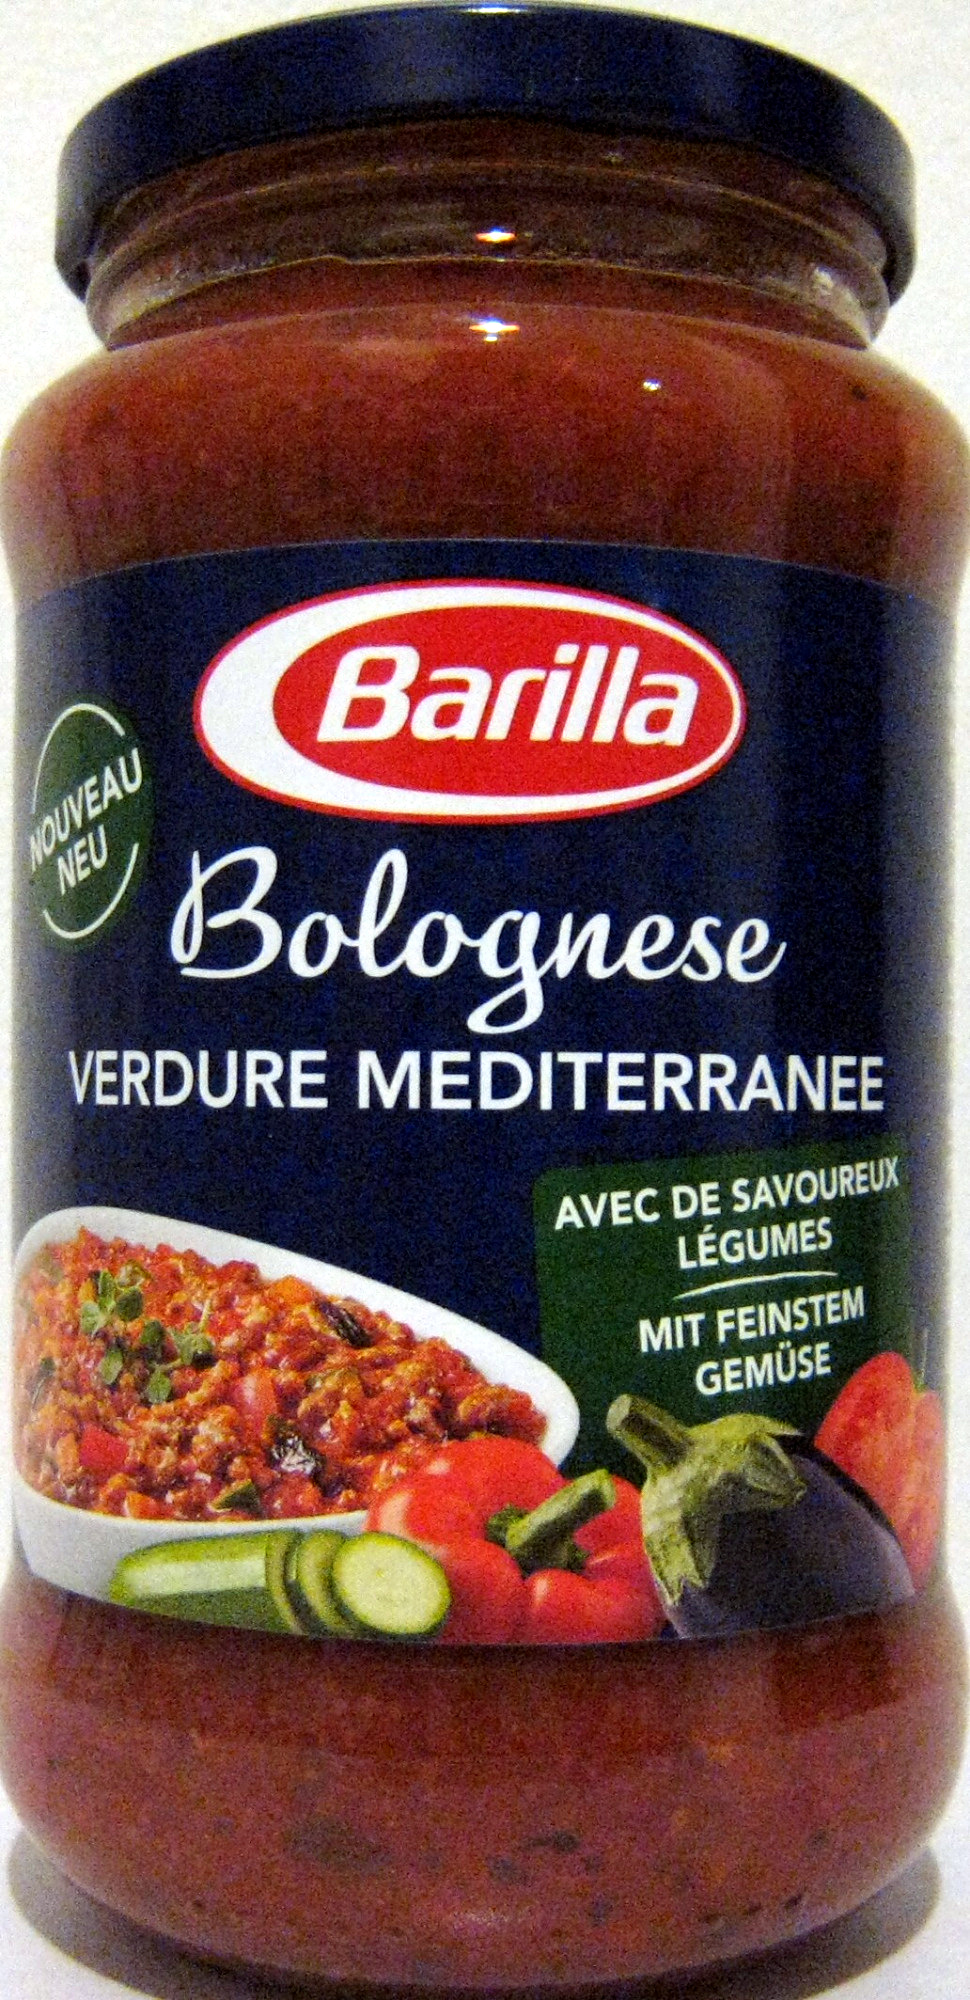 Bolognese verdure mediterranee - Prodotto - fr